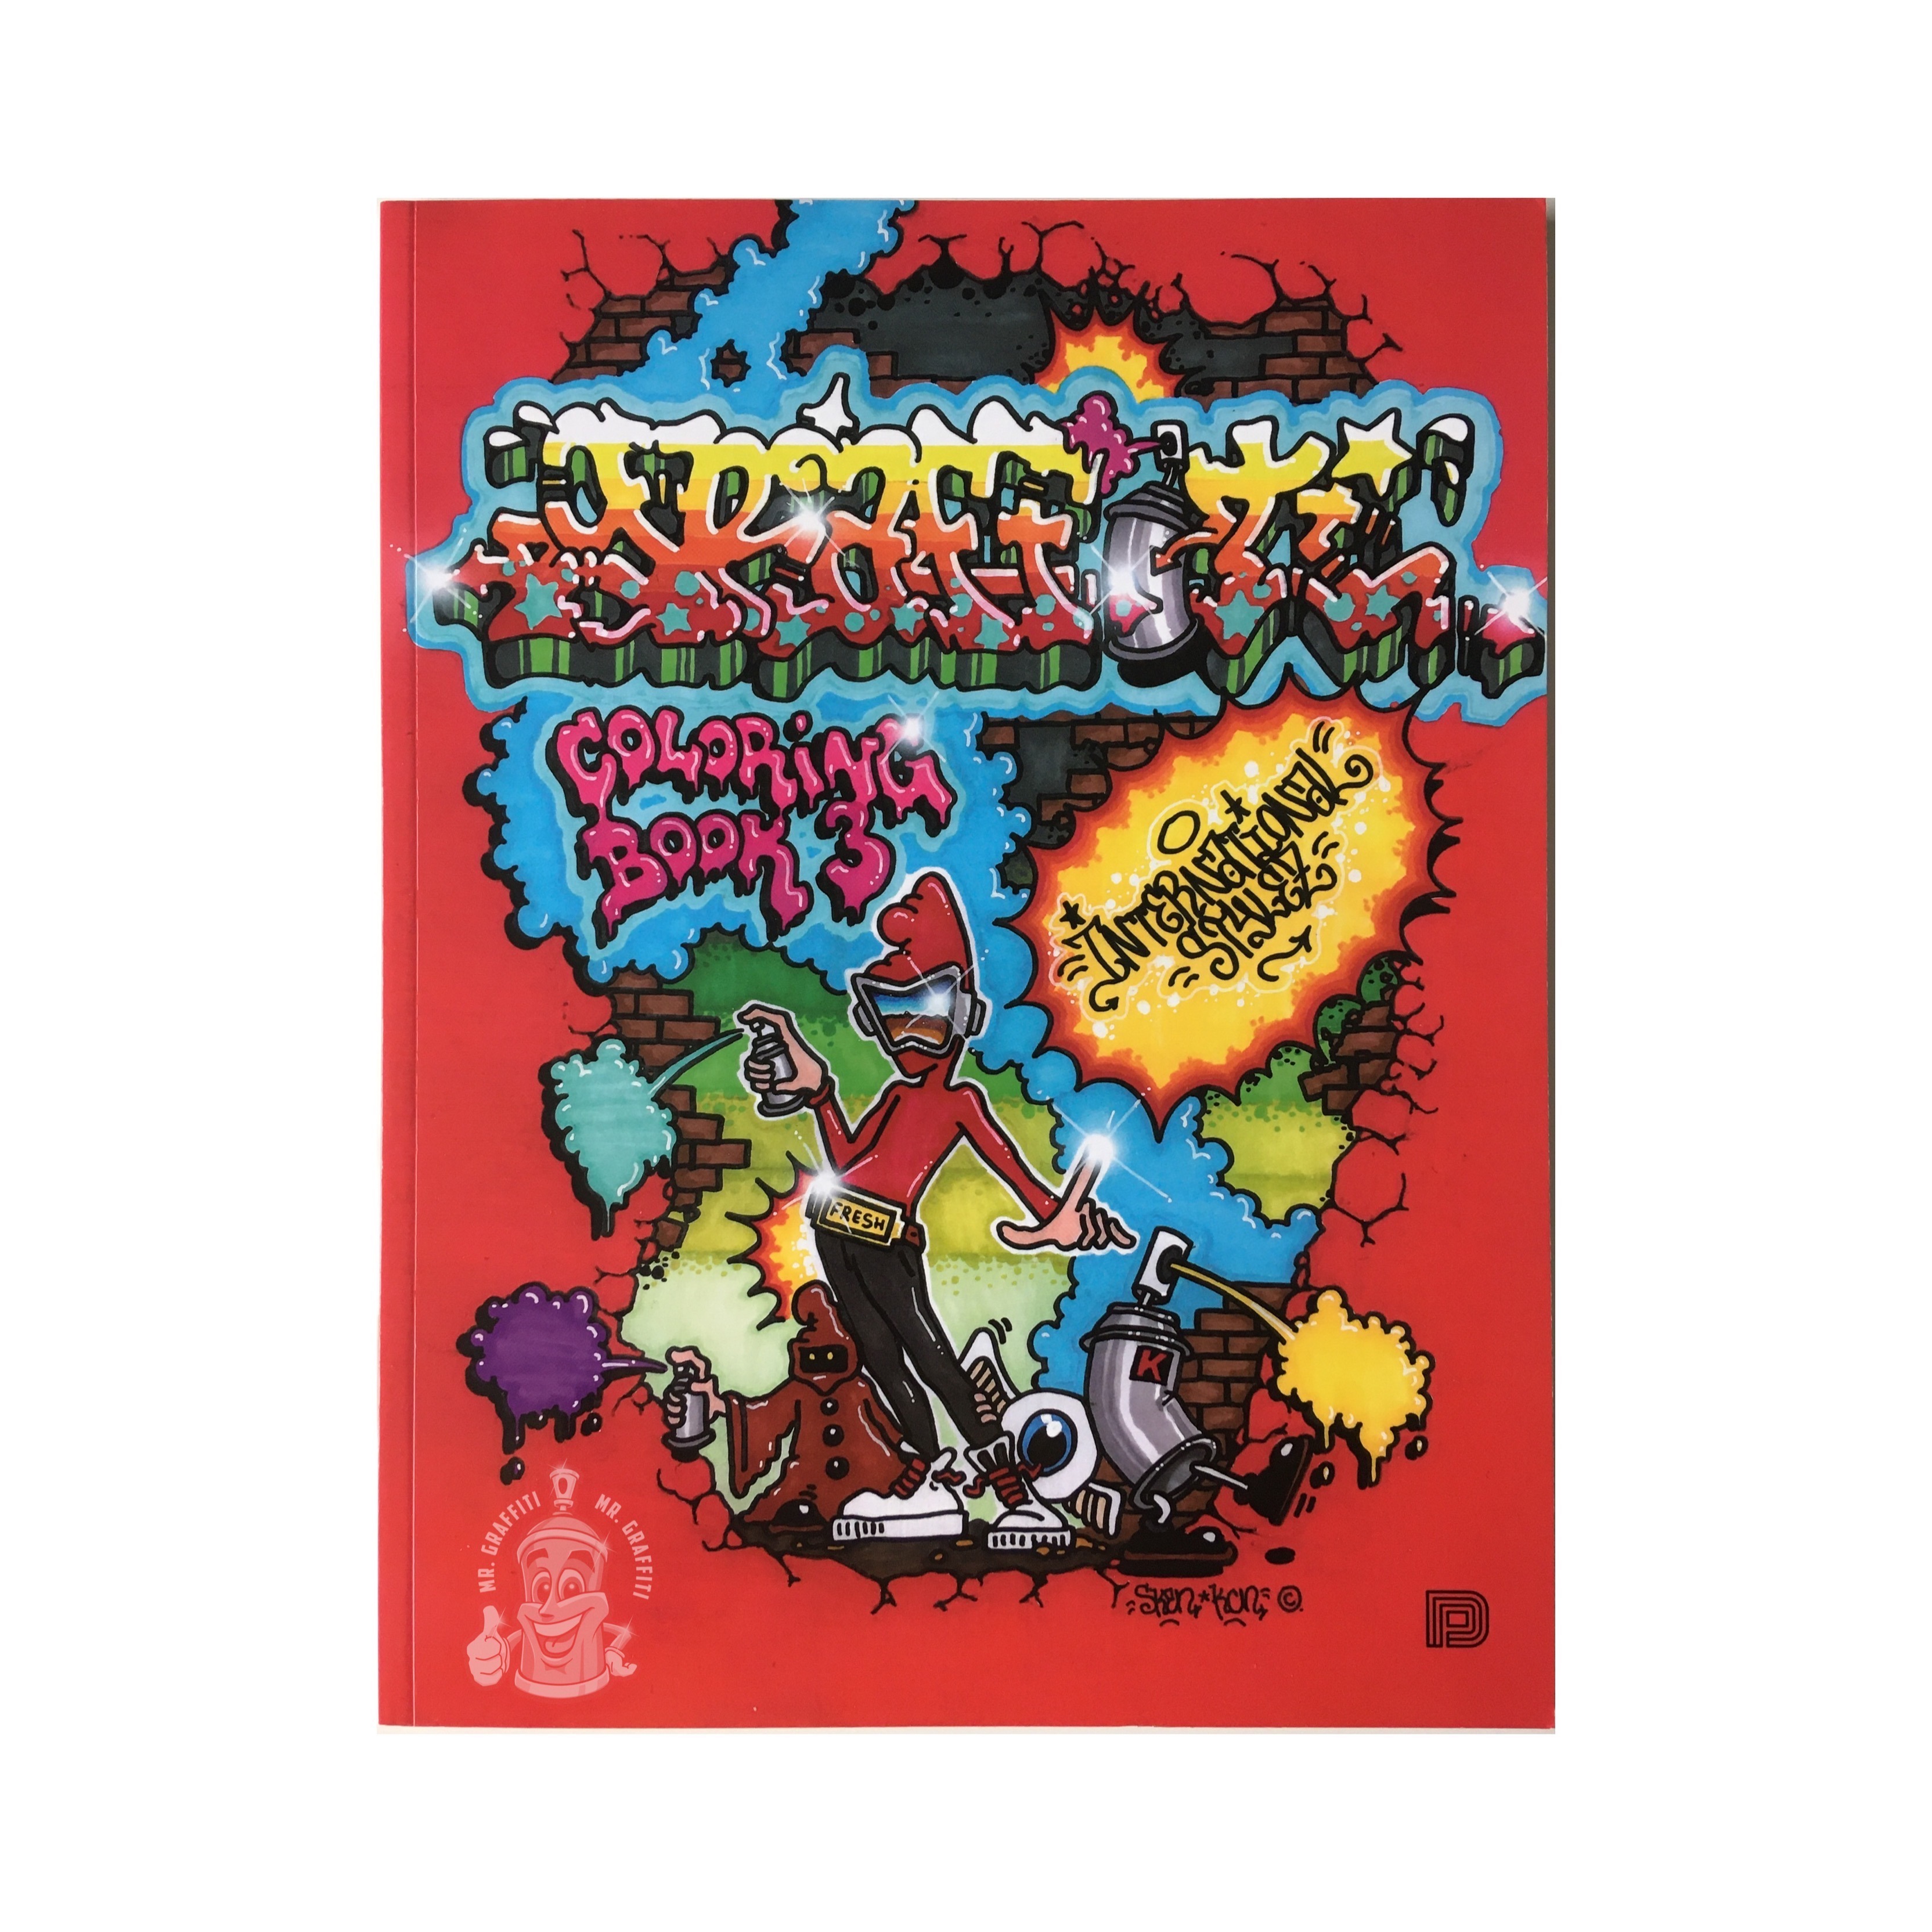 Download Graffiti- Coloring Book 3- International Styles - Mr. Graffiti